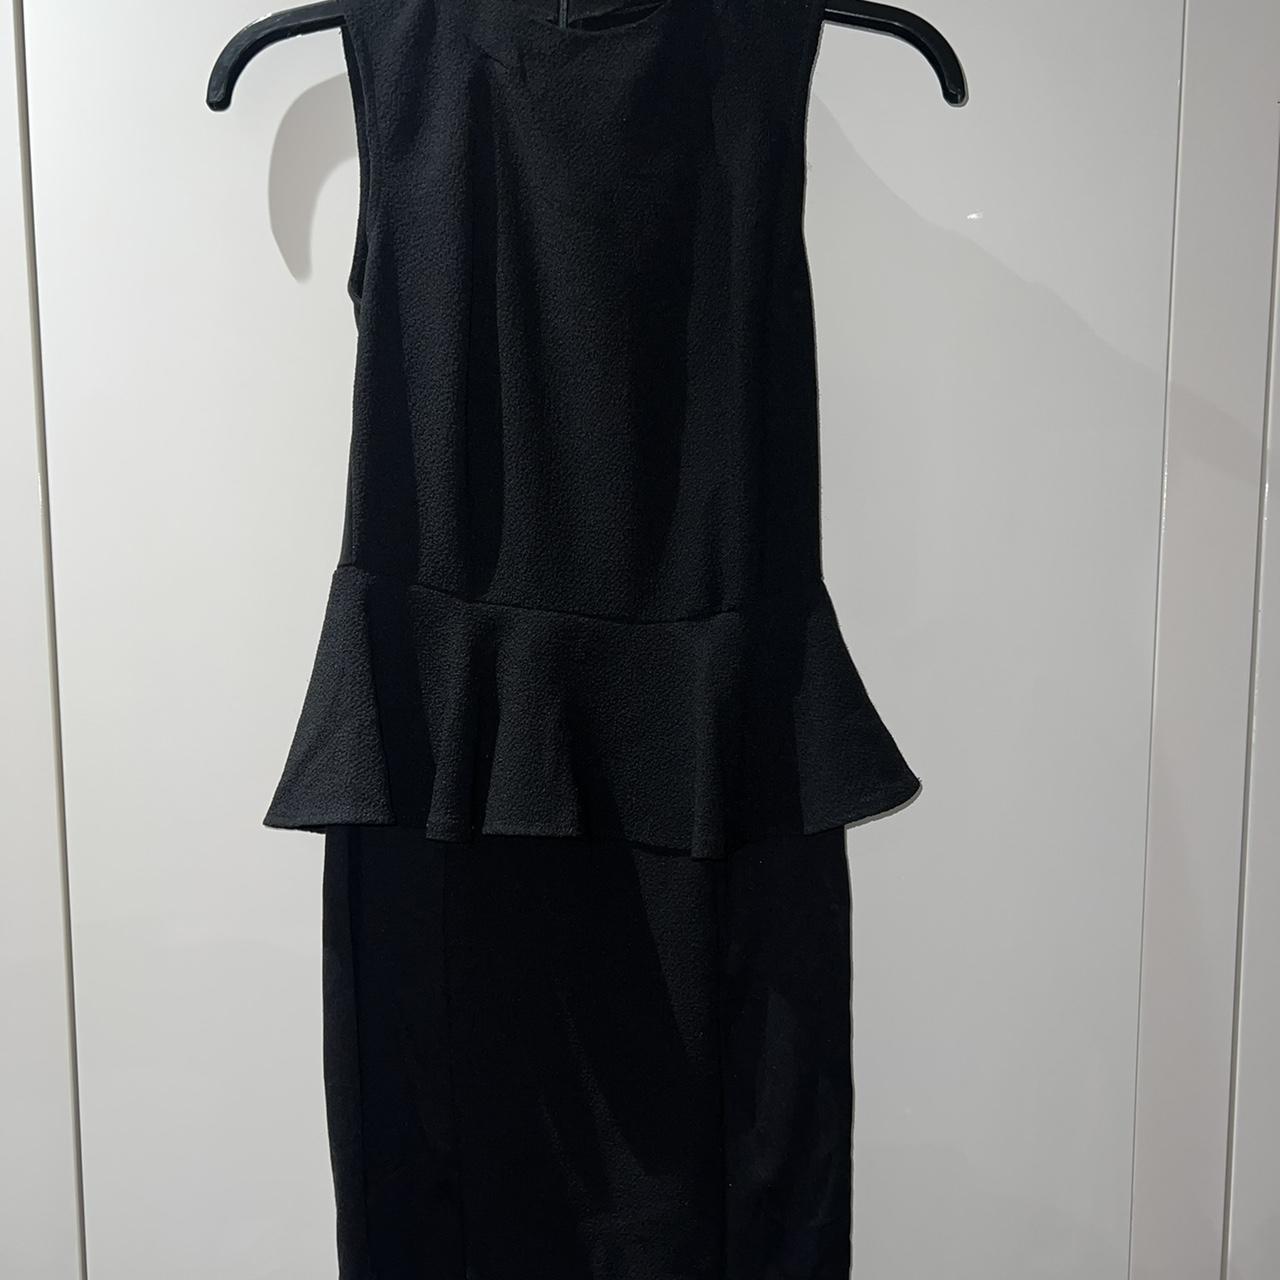 Zara black peplum style dress. I am 5’ 7” and it... - Depop